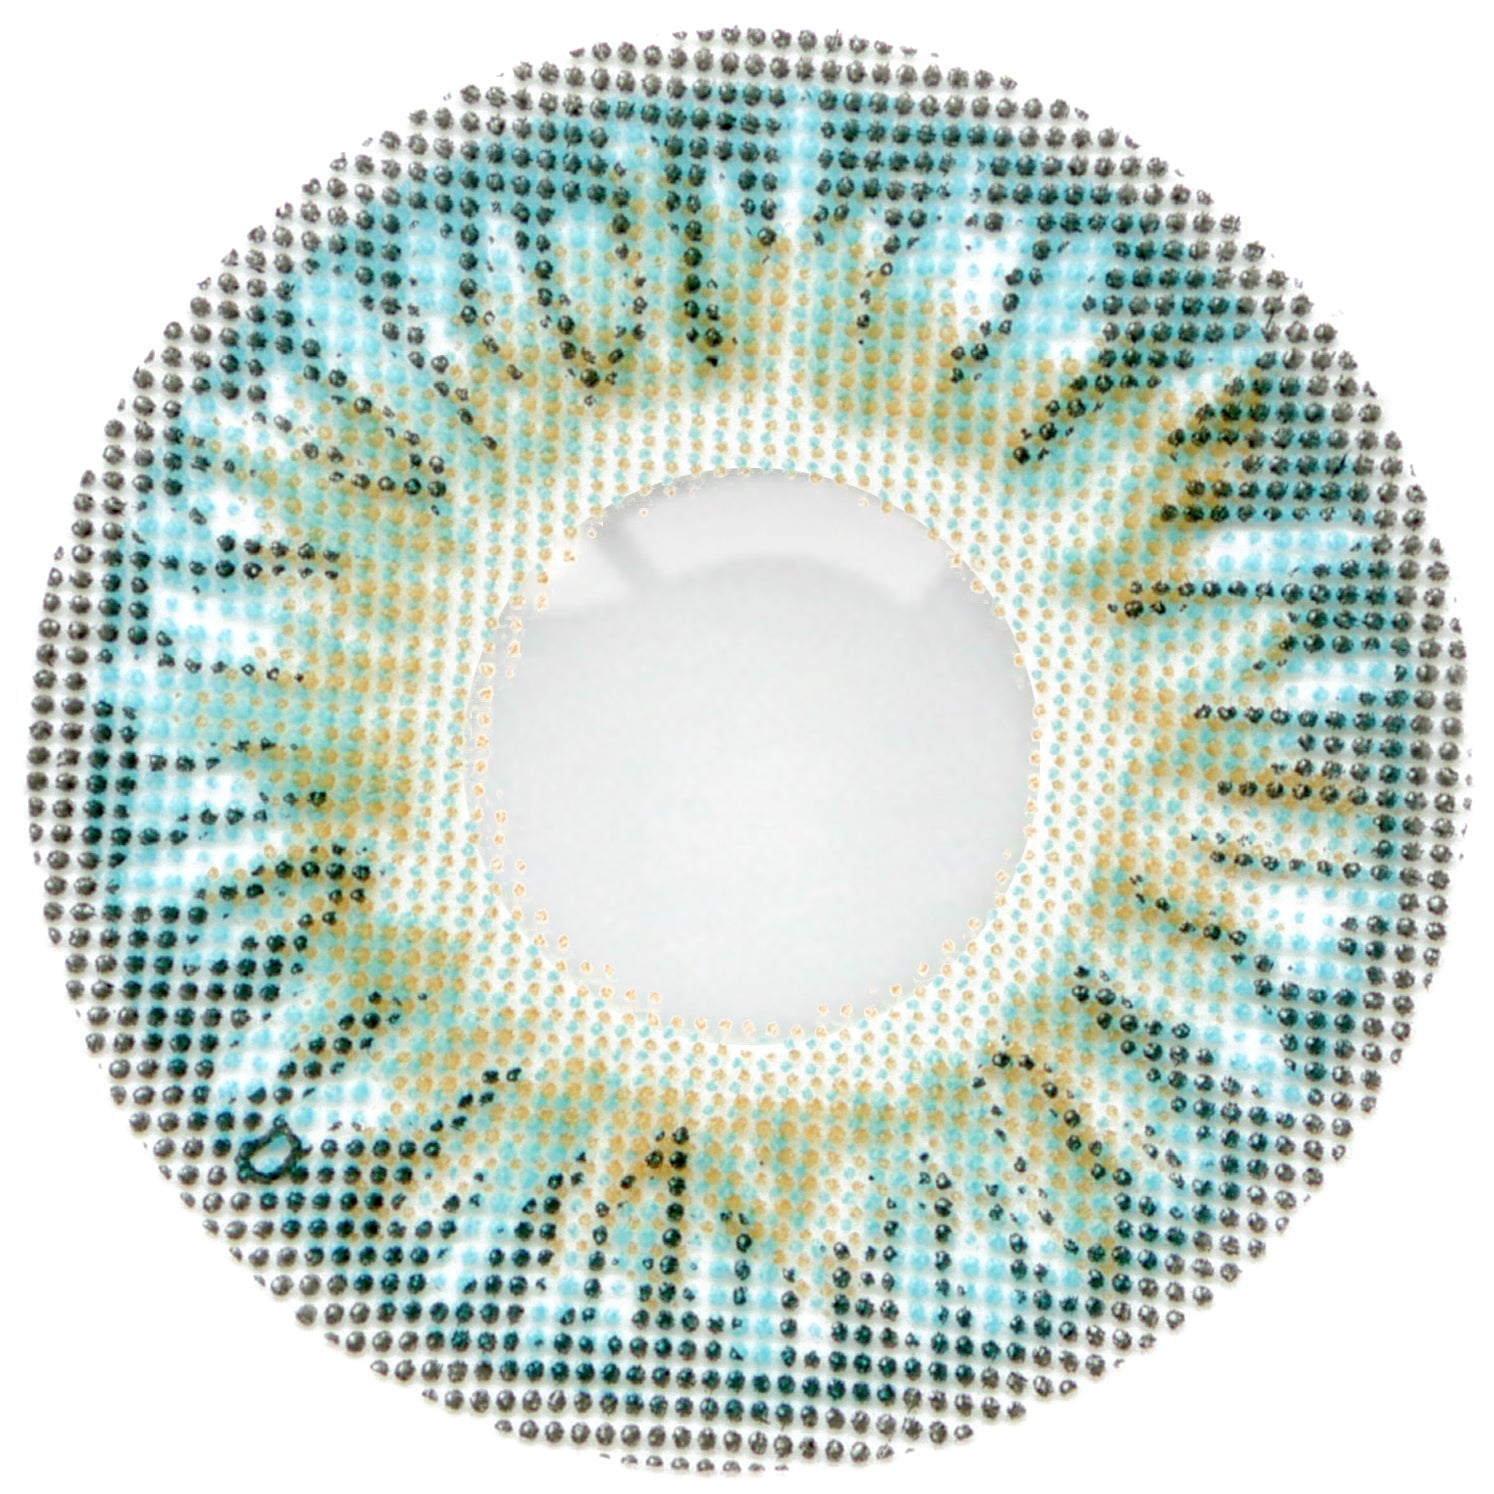 Loox Sparkle Aquamarine Cosmetic Contact Lenses, FDA & Health Canada Cleared